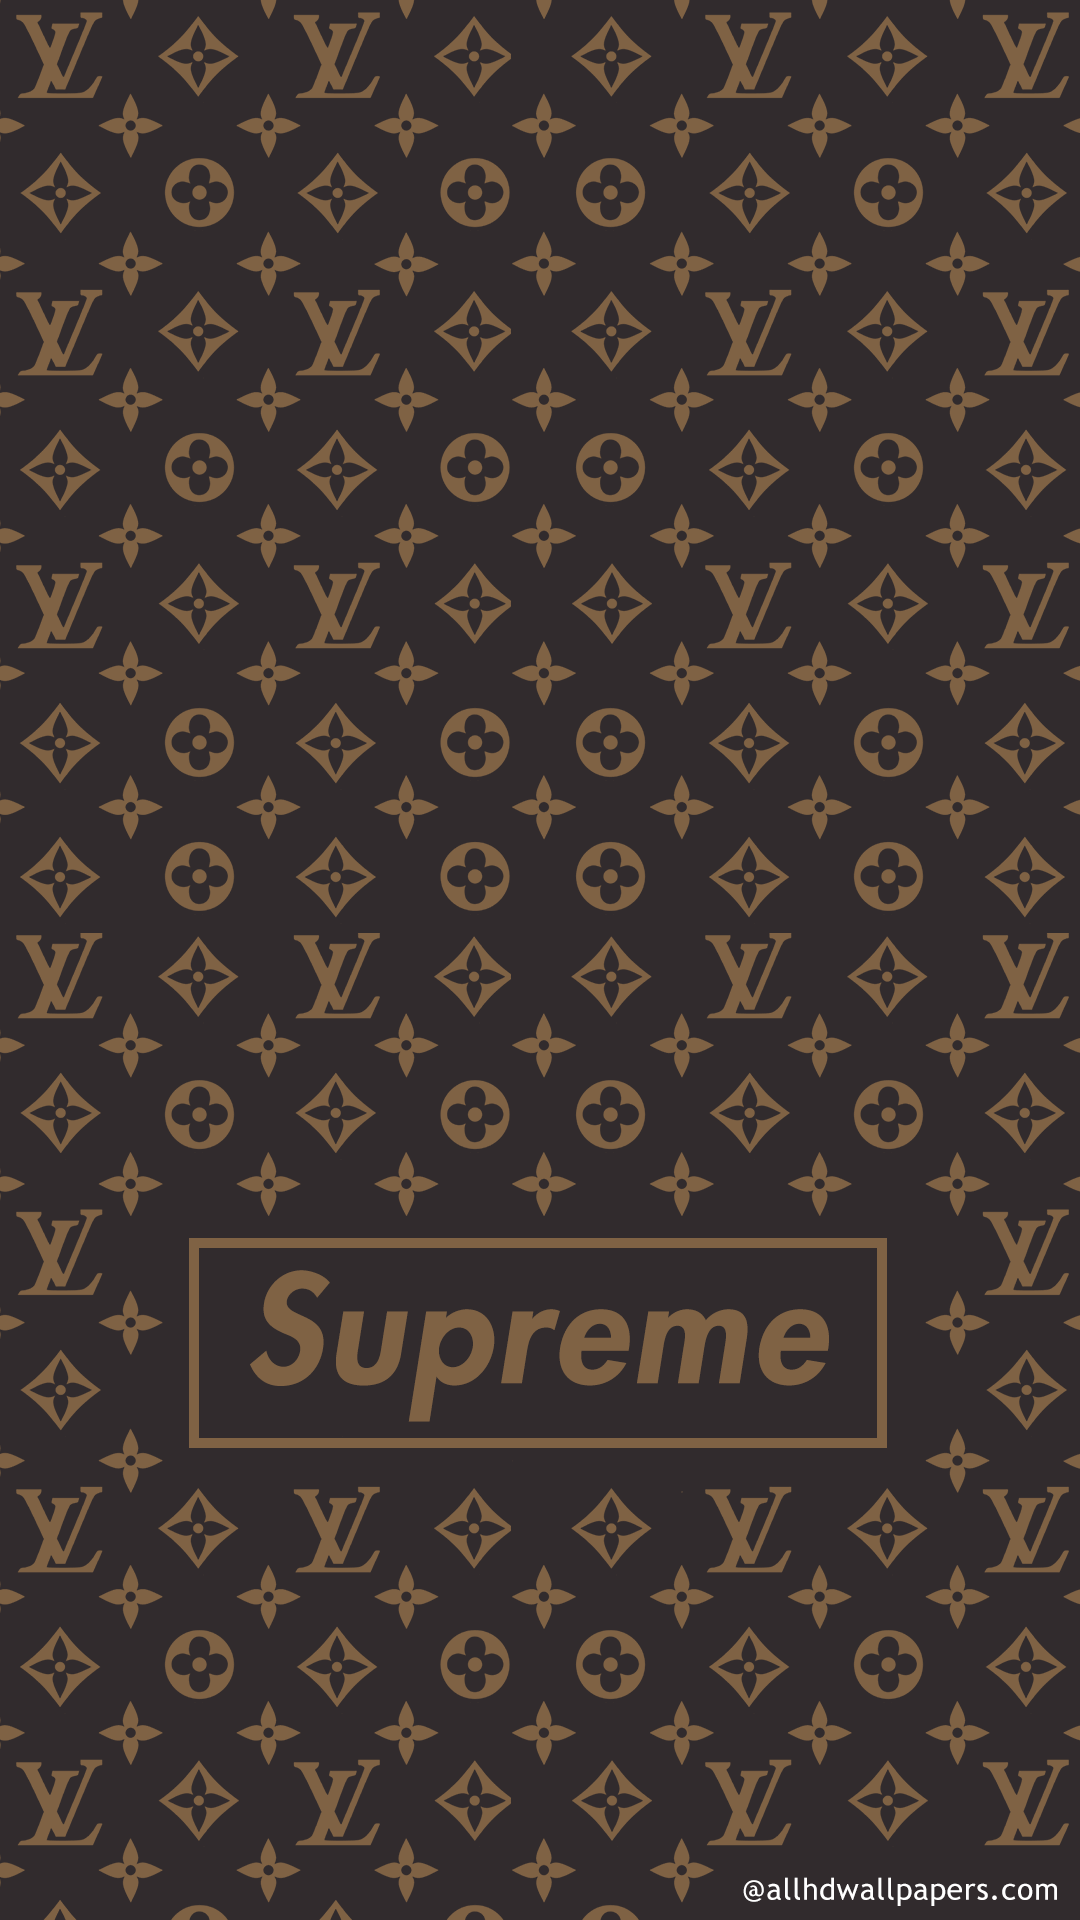 Supreme Wallpaper in 4K. Supreme iphone wallpaper, Supreme wallpaper, Gucci wallpaper iphone